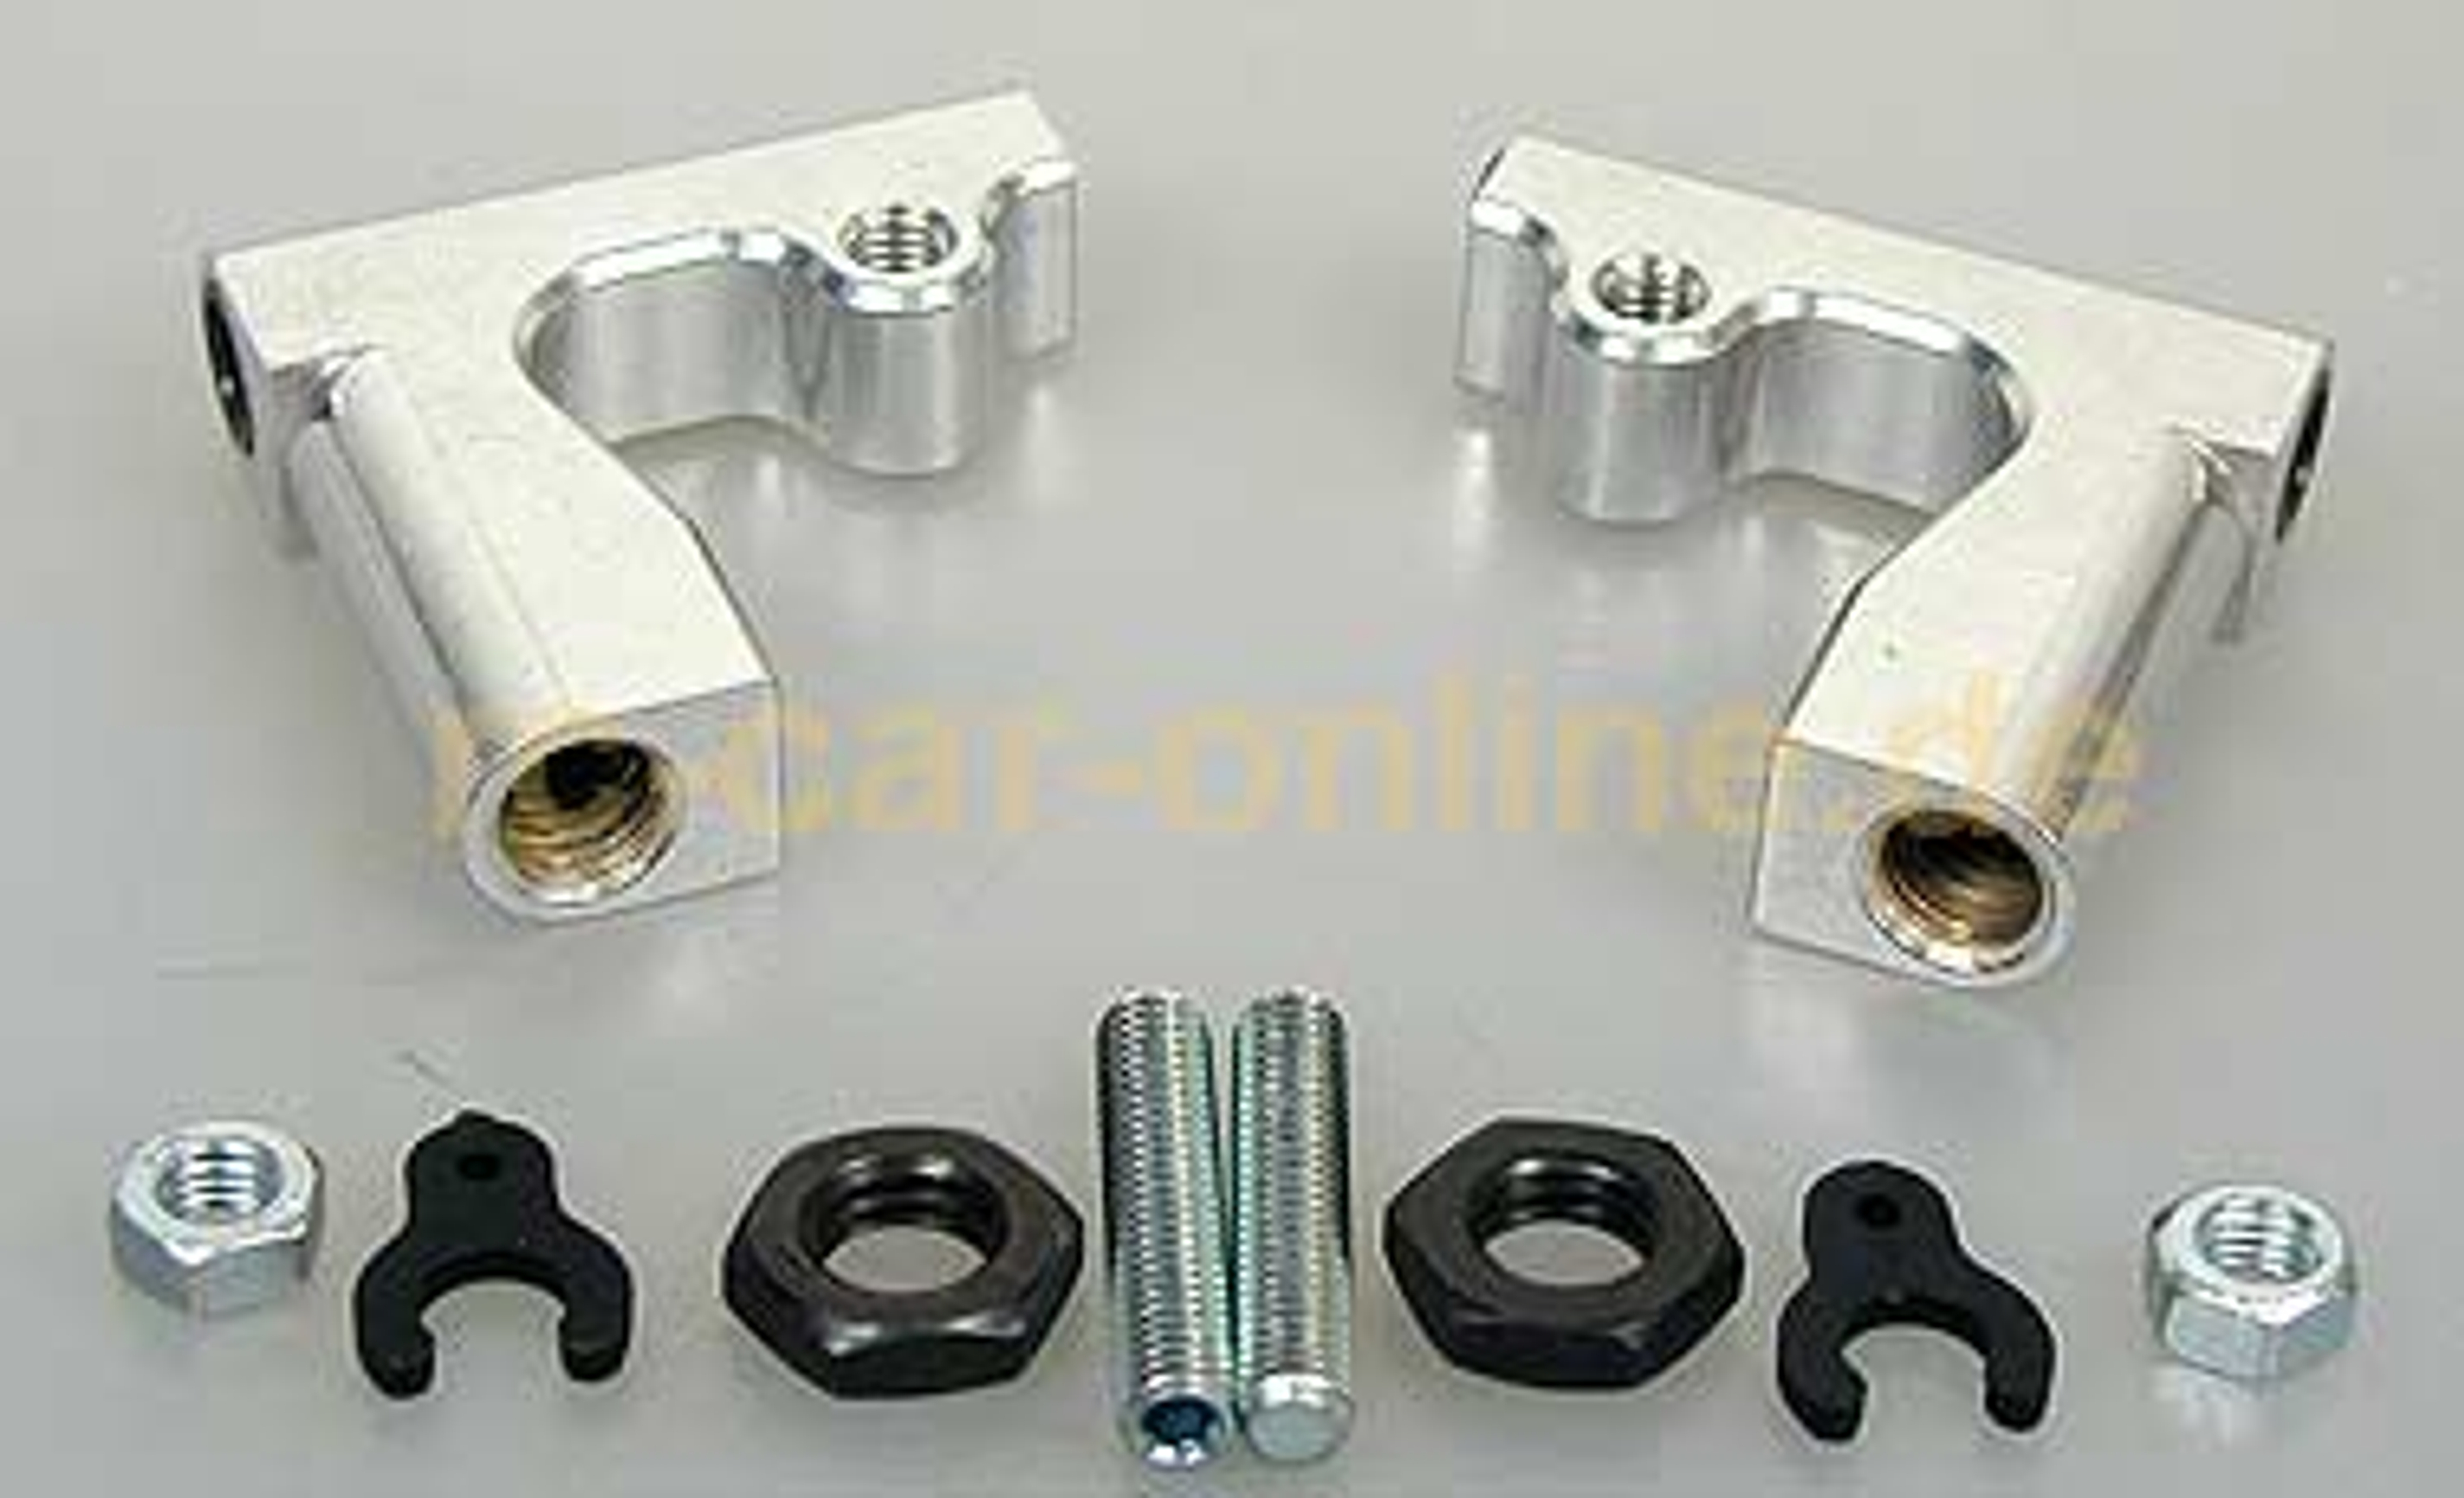 HT Aluminum rear suspension conversion kit for FG 1/6 cars,2WD, y0990, set, SO